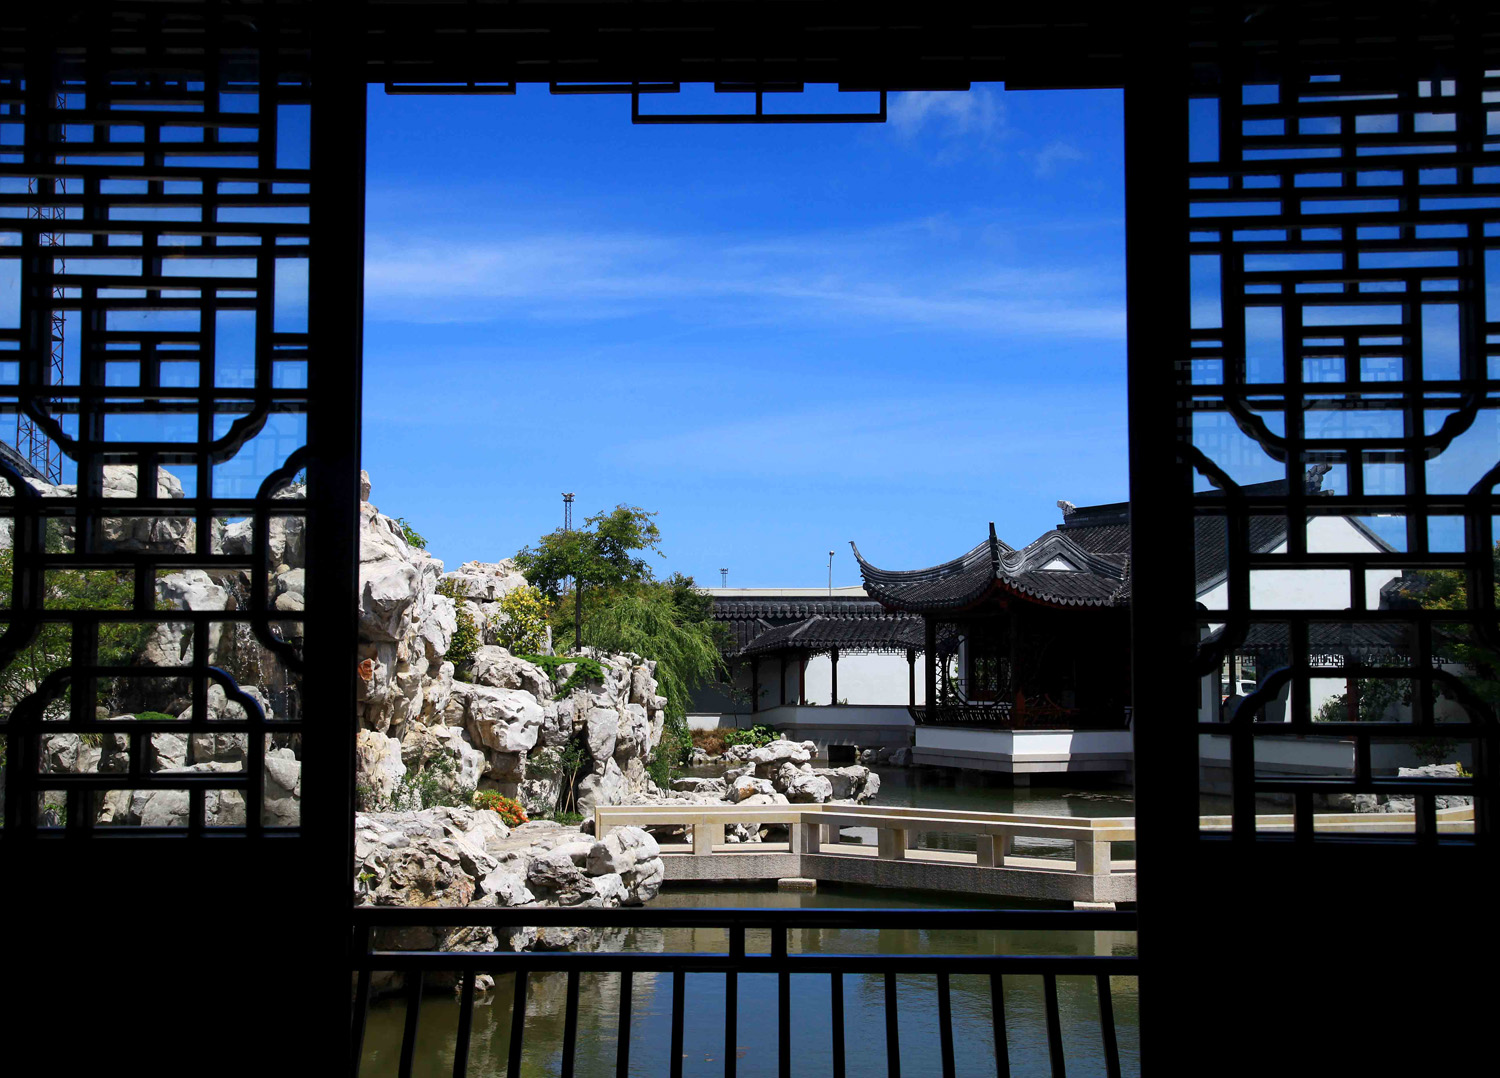 Chinese garden entrance gate in Dunedin